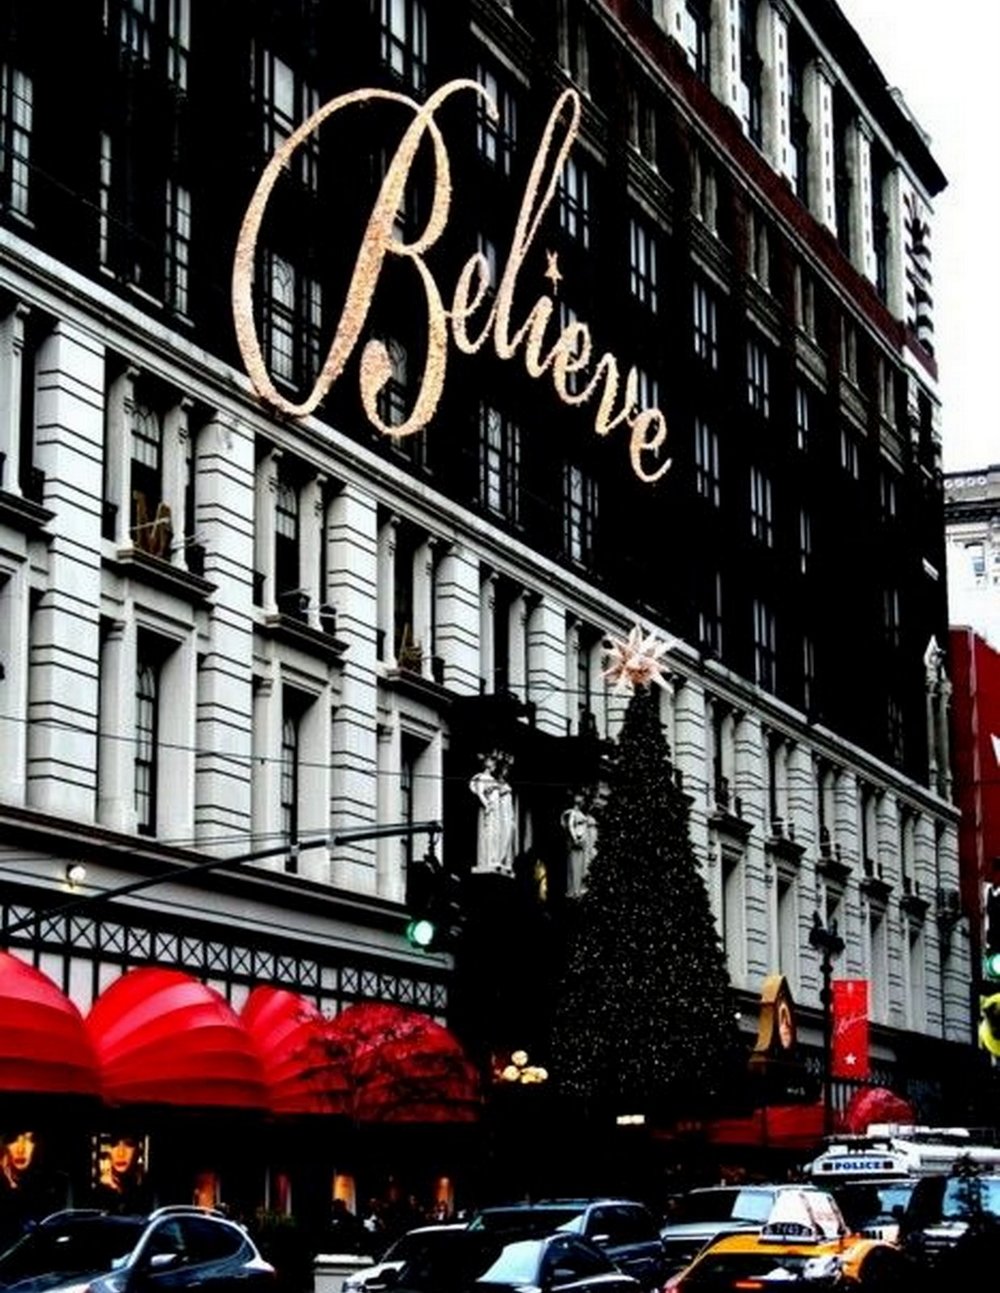 Believe Christmas at Macys' in NY :: House of Valentina